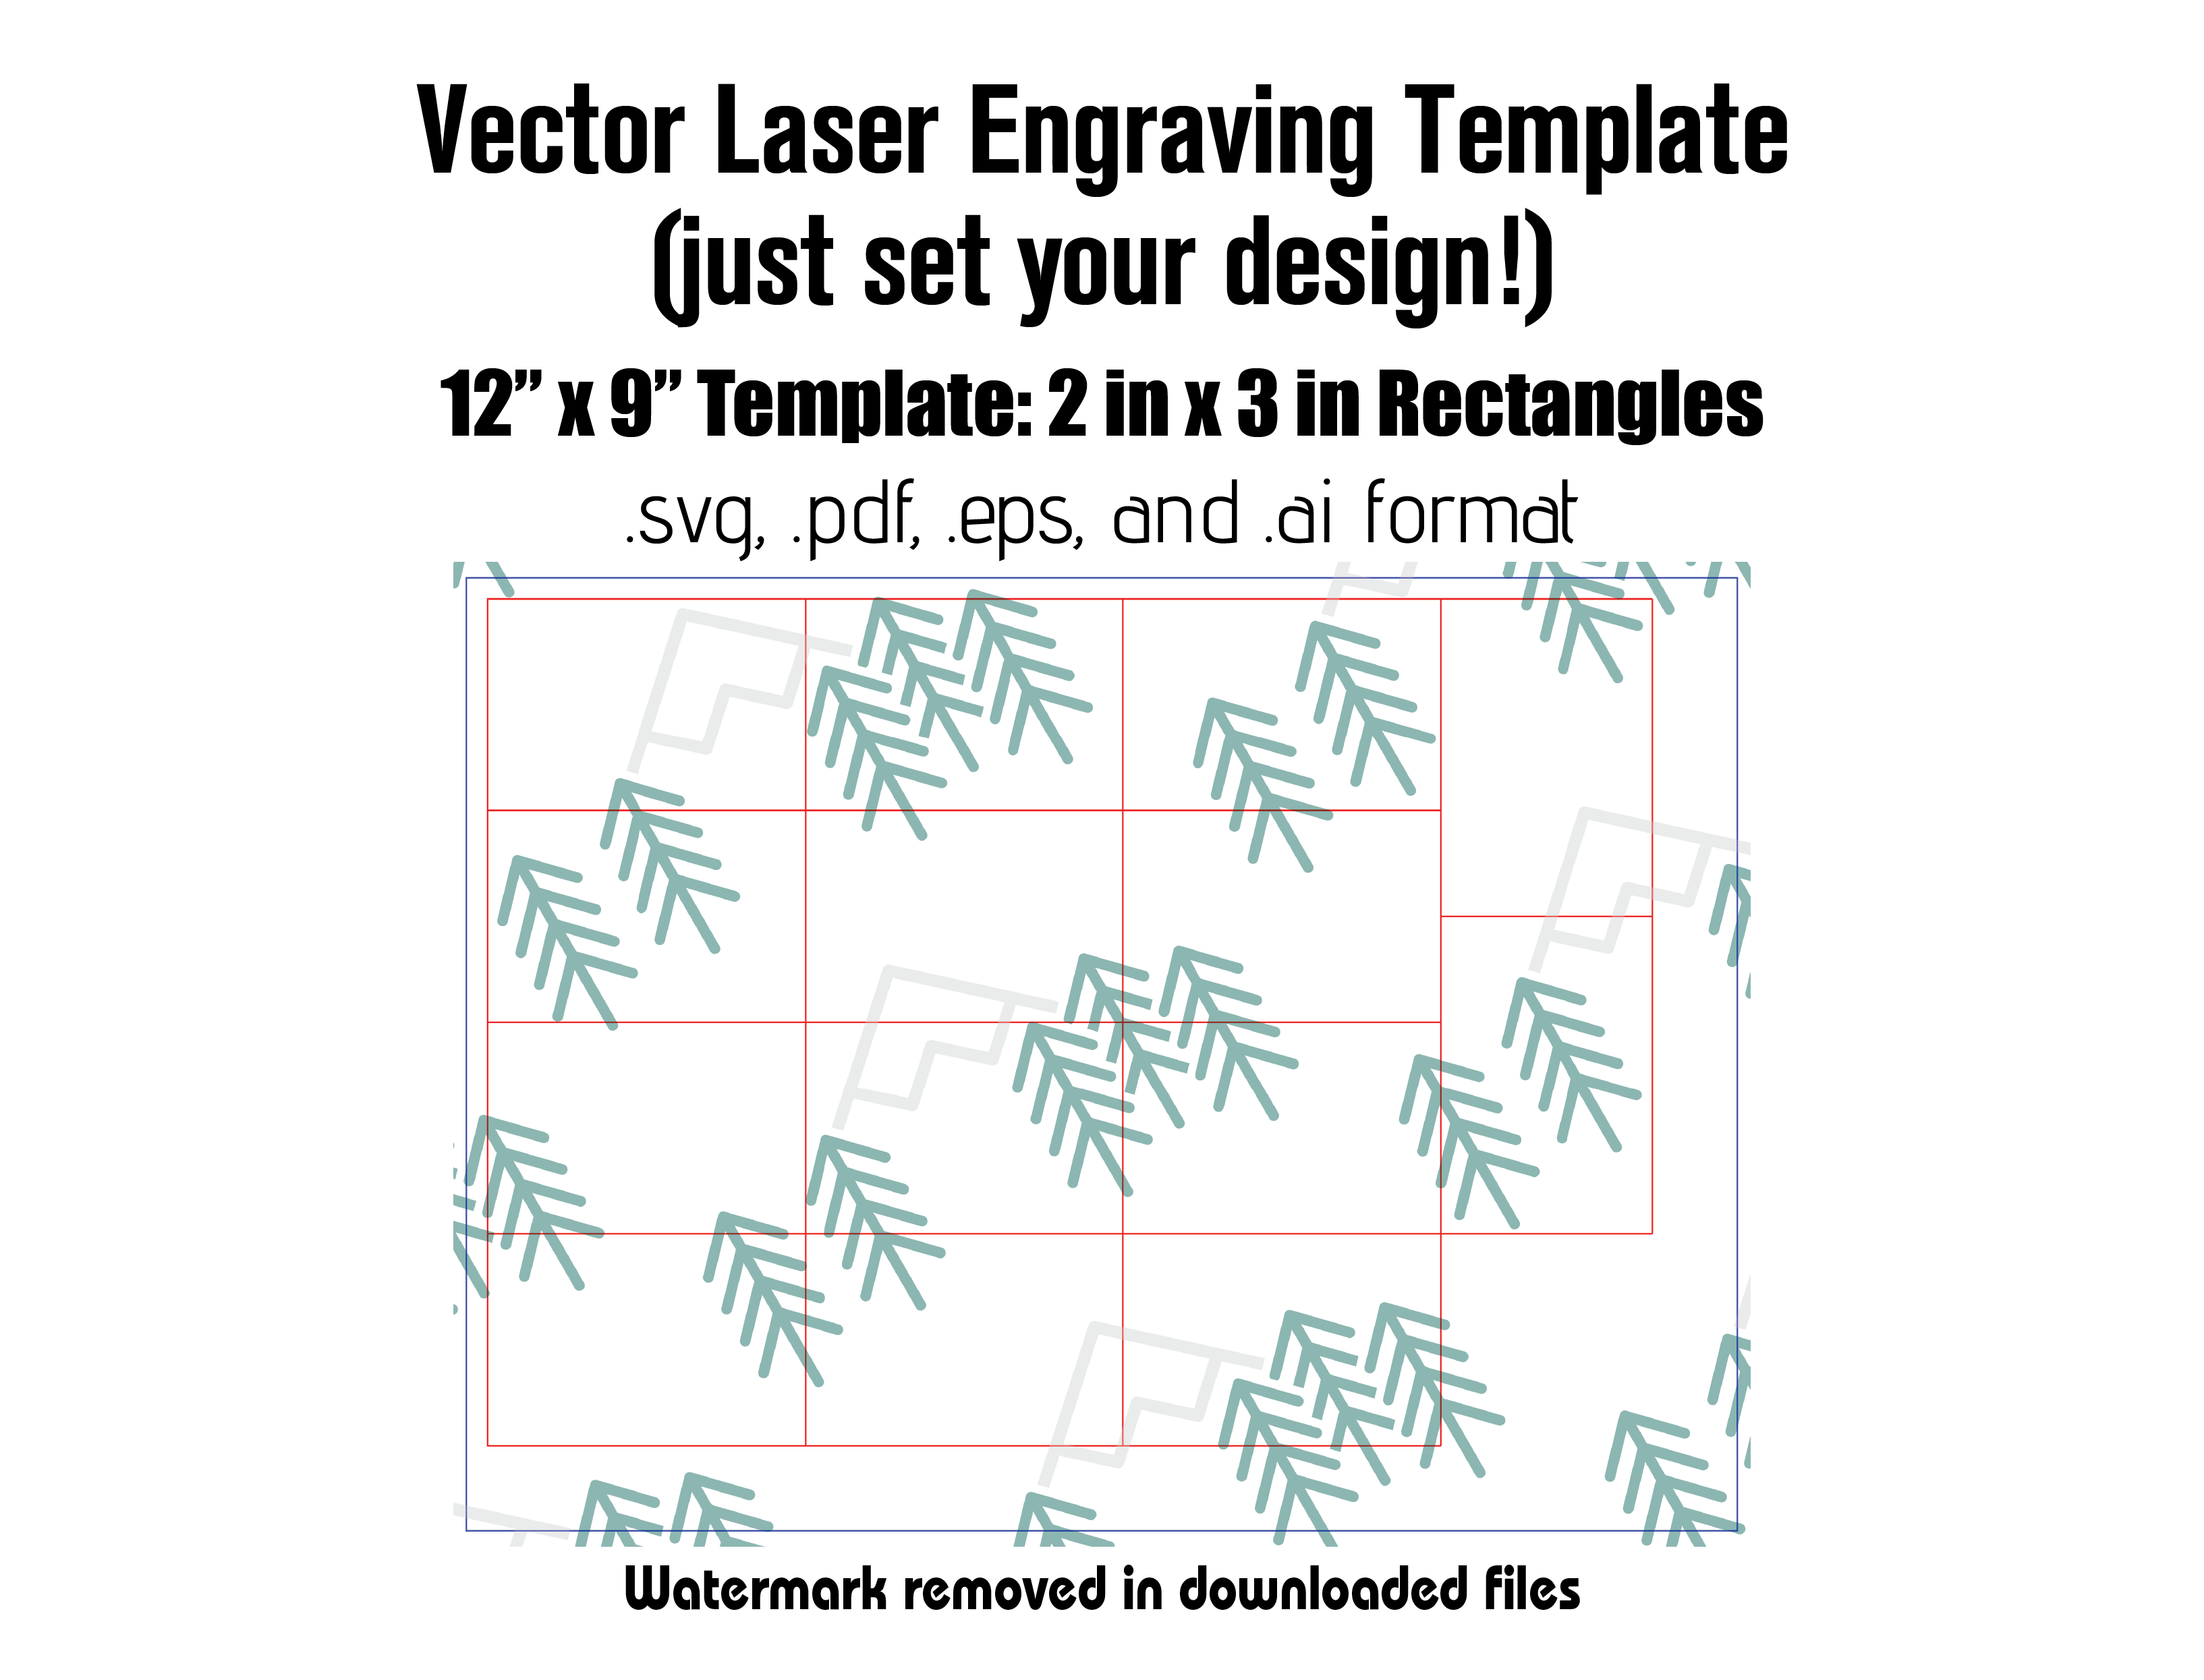 Digital Laser Cutting Template: 2" x 3" Rectangles - 12" x 9" Sheet Size Digital Laser Engraving Files Craftworks NW 